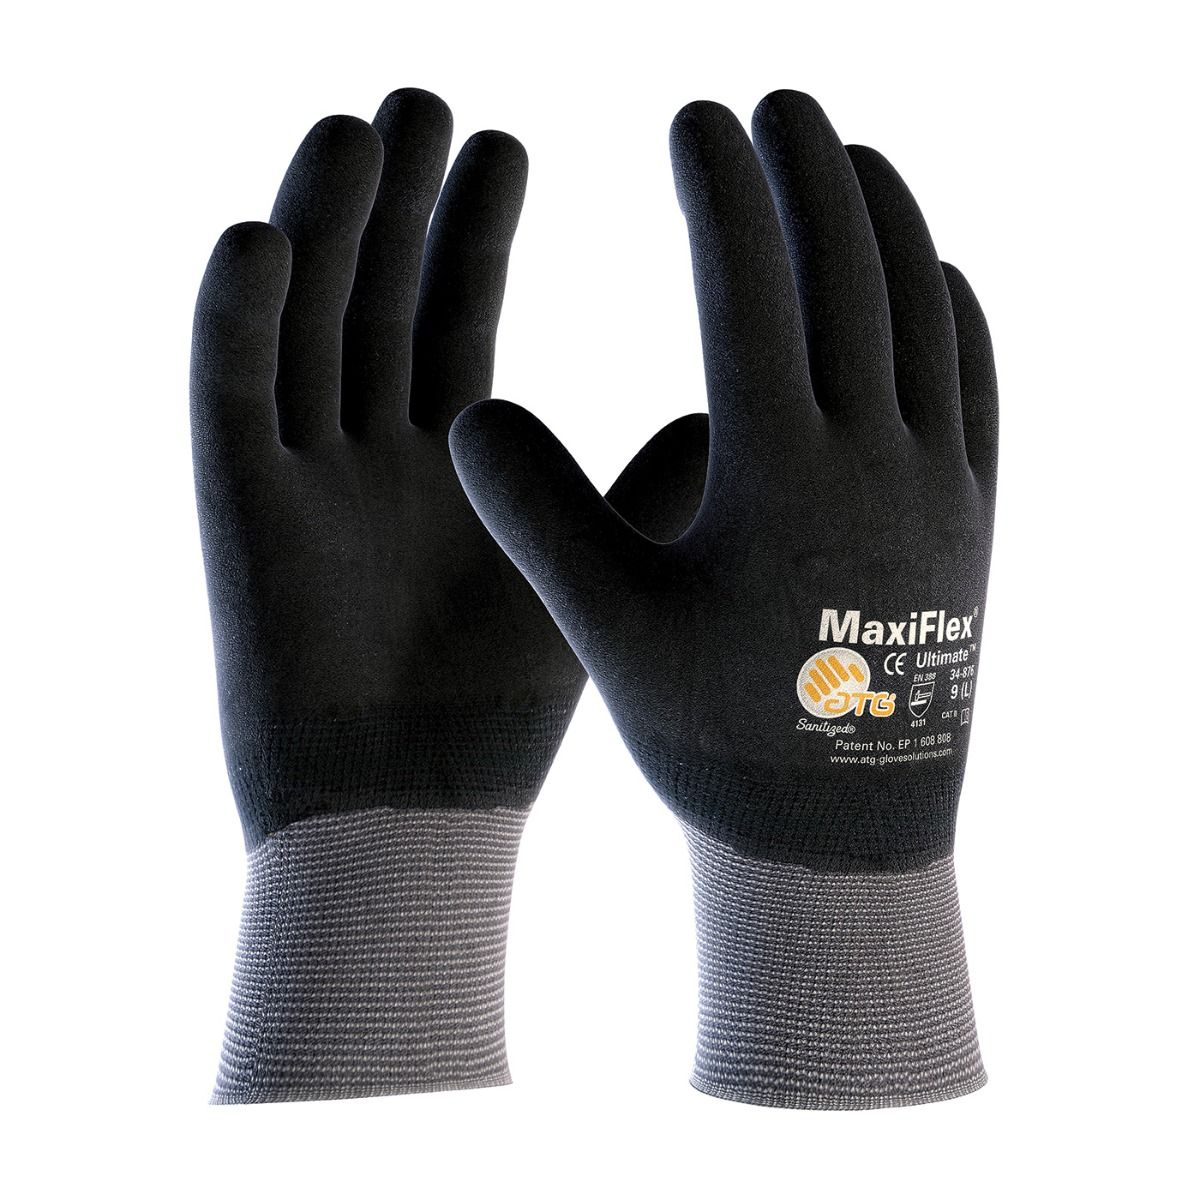 Maxiflex, Fully Coated Nitrile Microfoam Grip Gloves